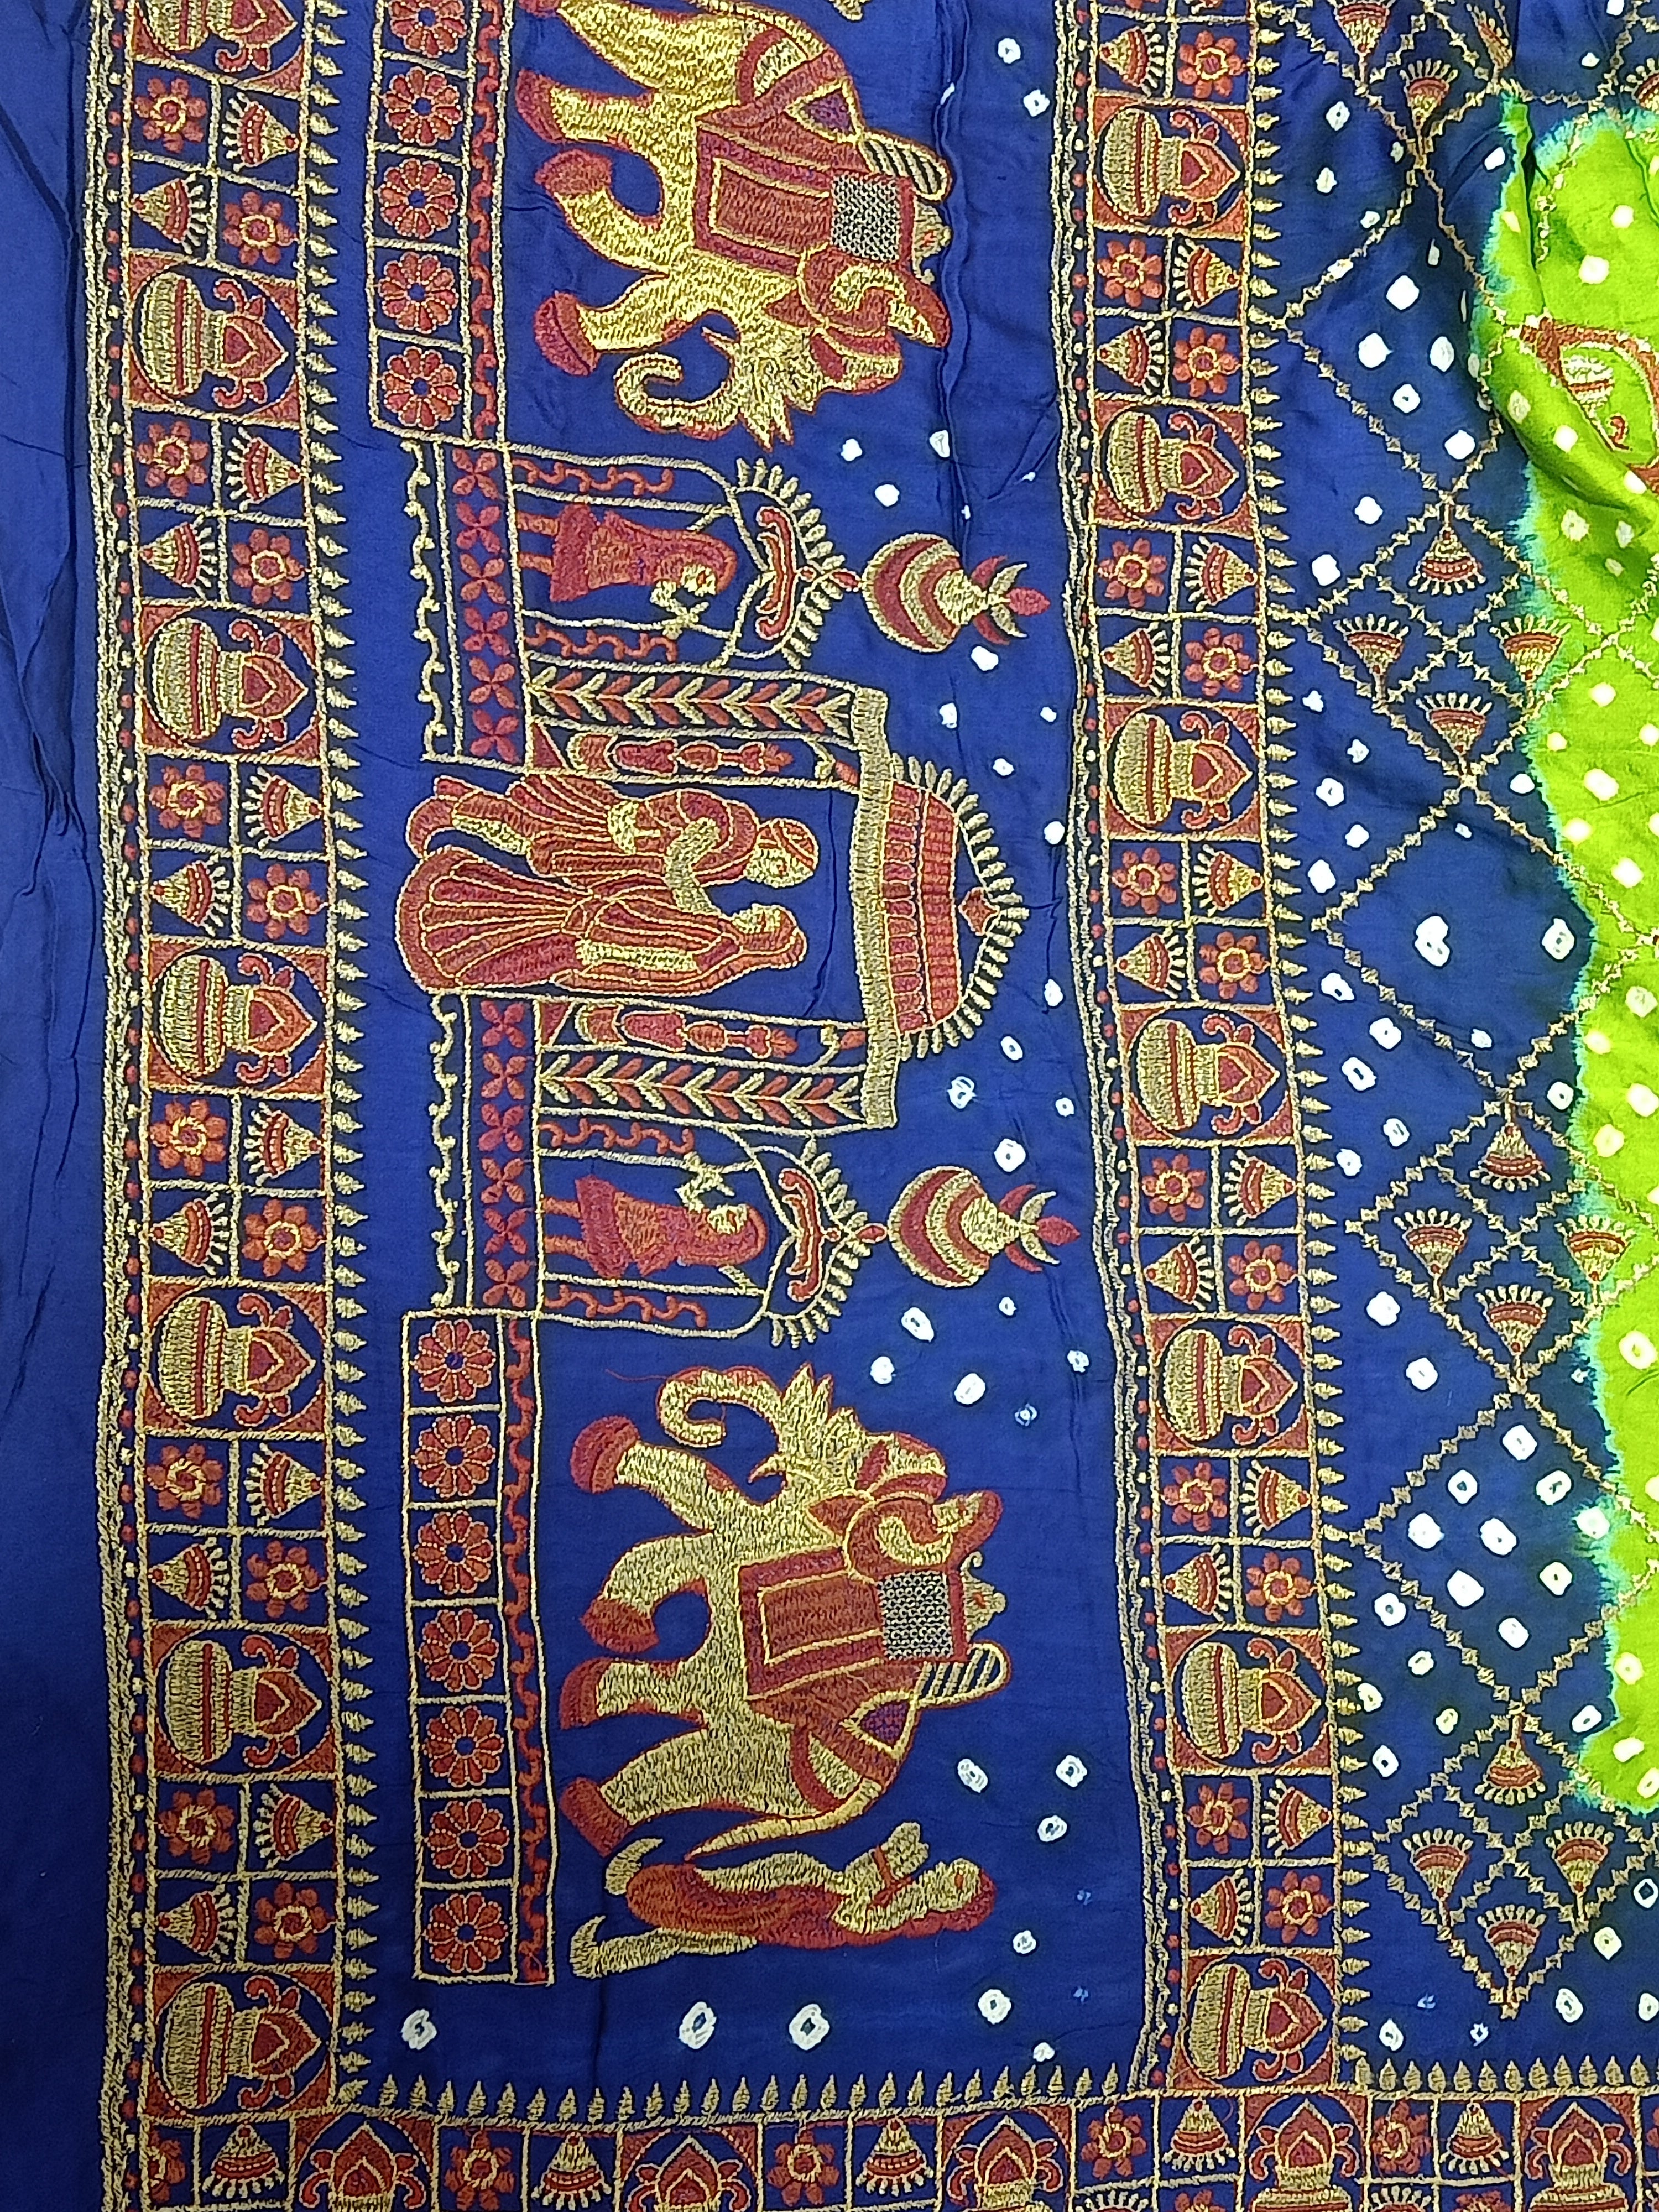 Modaal Gajji fabric